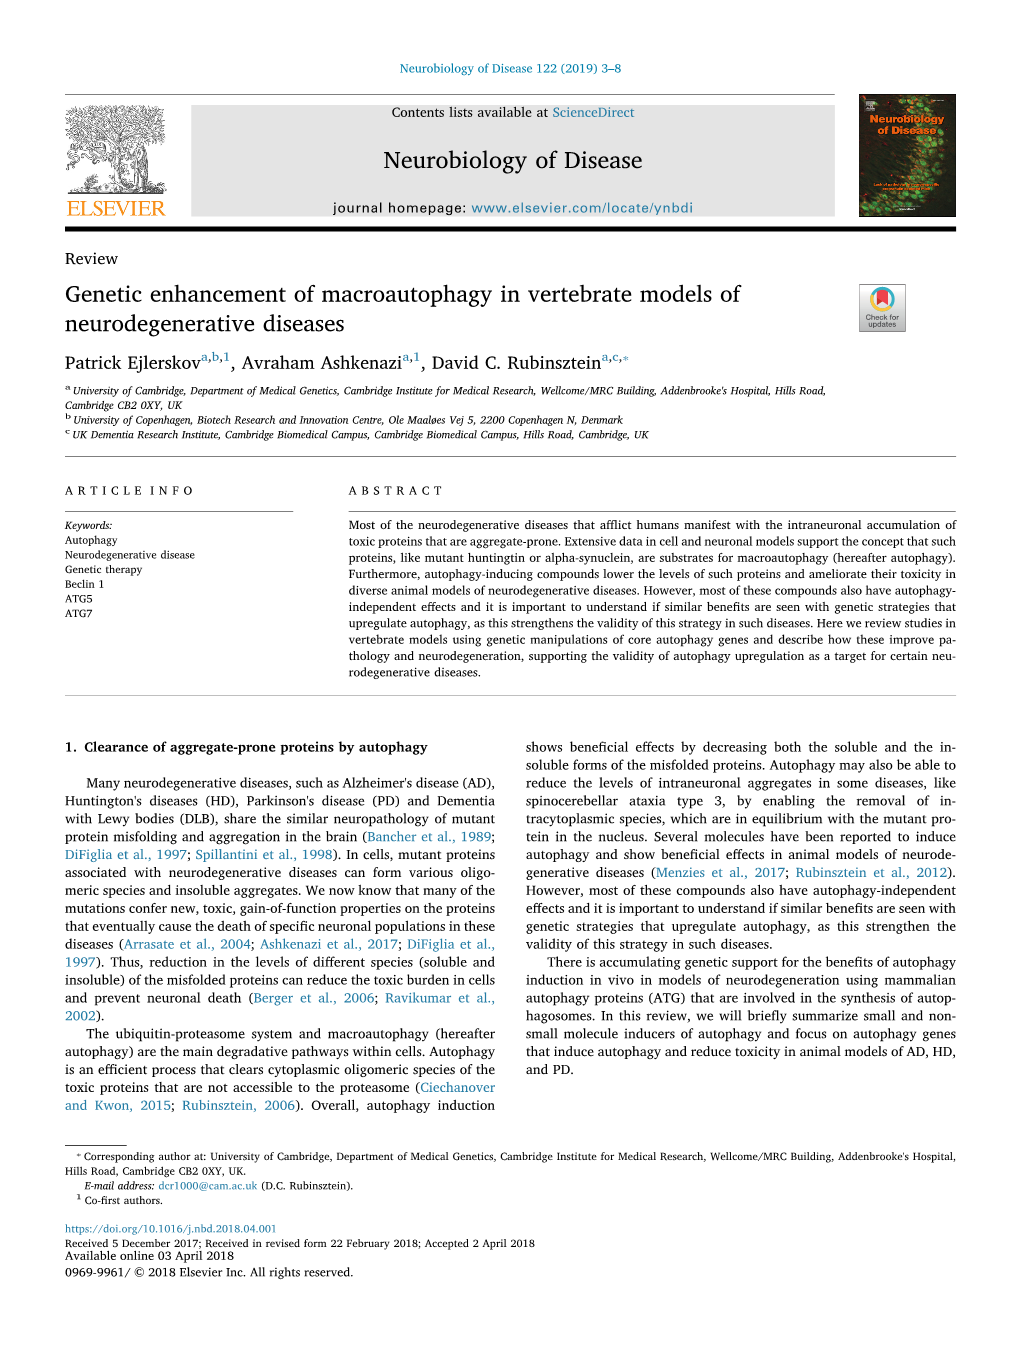 Genetic Enhancement of Macroautophagy in Vertebrate Models of Neurodegenerative Diseases T ⁎ Patrick Ejlerskova,B,1, Avraham Ashkenazia,1, David C